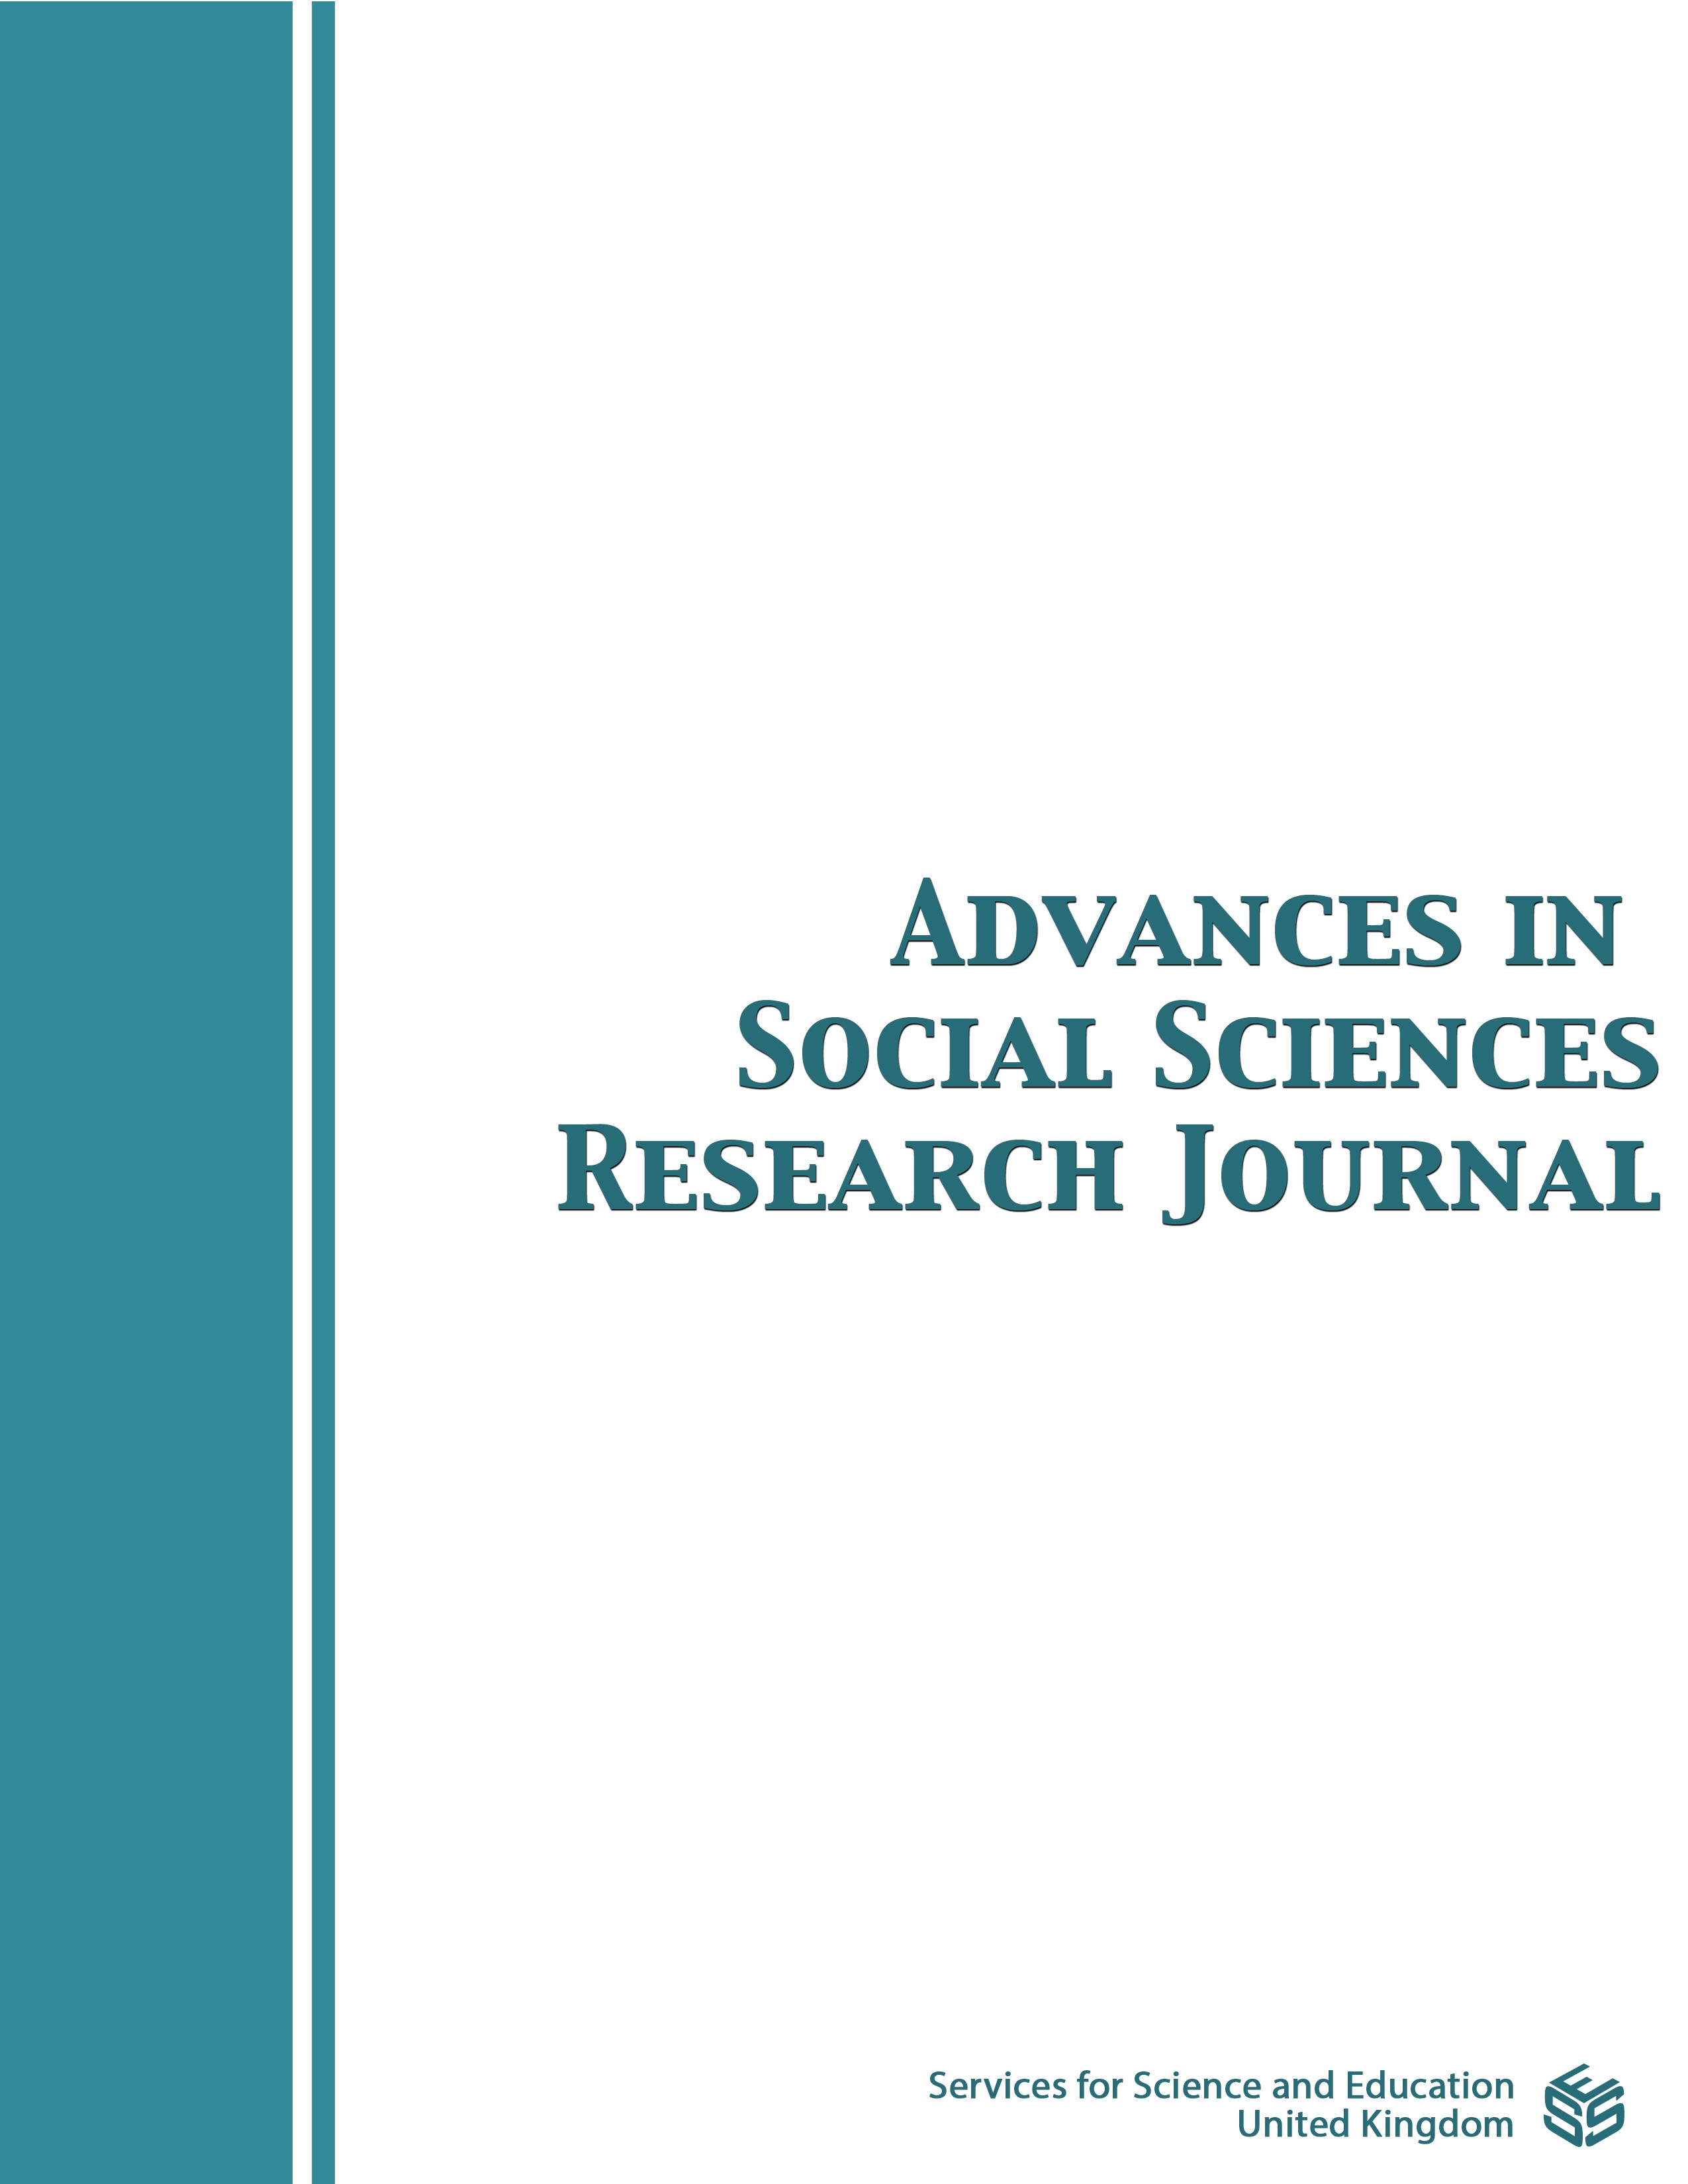 					View Vol. 8 No. 7 (2021): Advances in Social Sciences Research Journal 
				